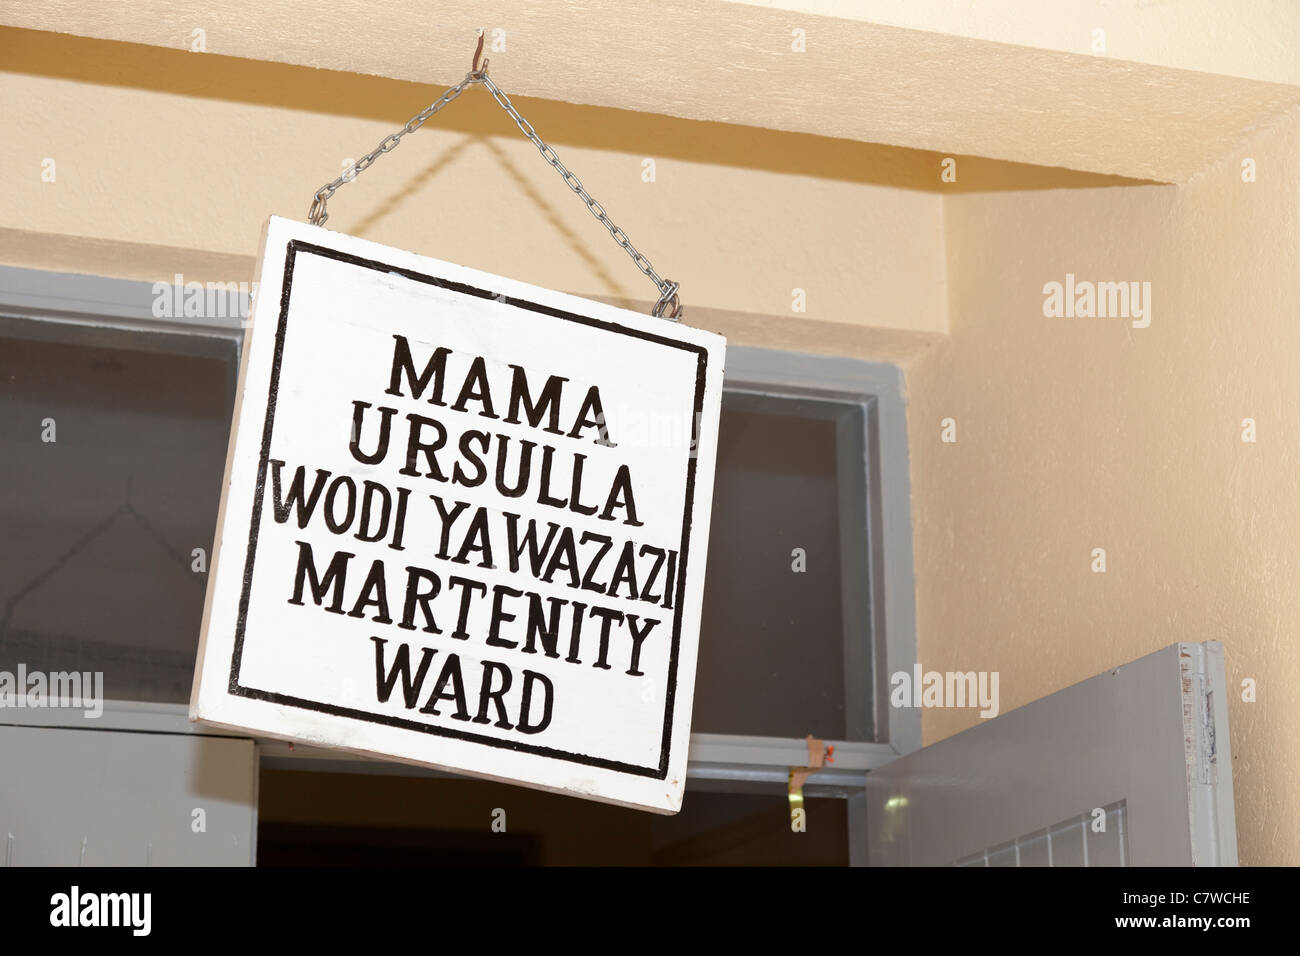 Para firmar la 'Mama Ursulla Wodi Yawazazi Maternidad' Hospital Marangu, Moshi, Tanzania Foto de stock